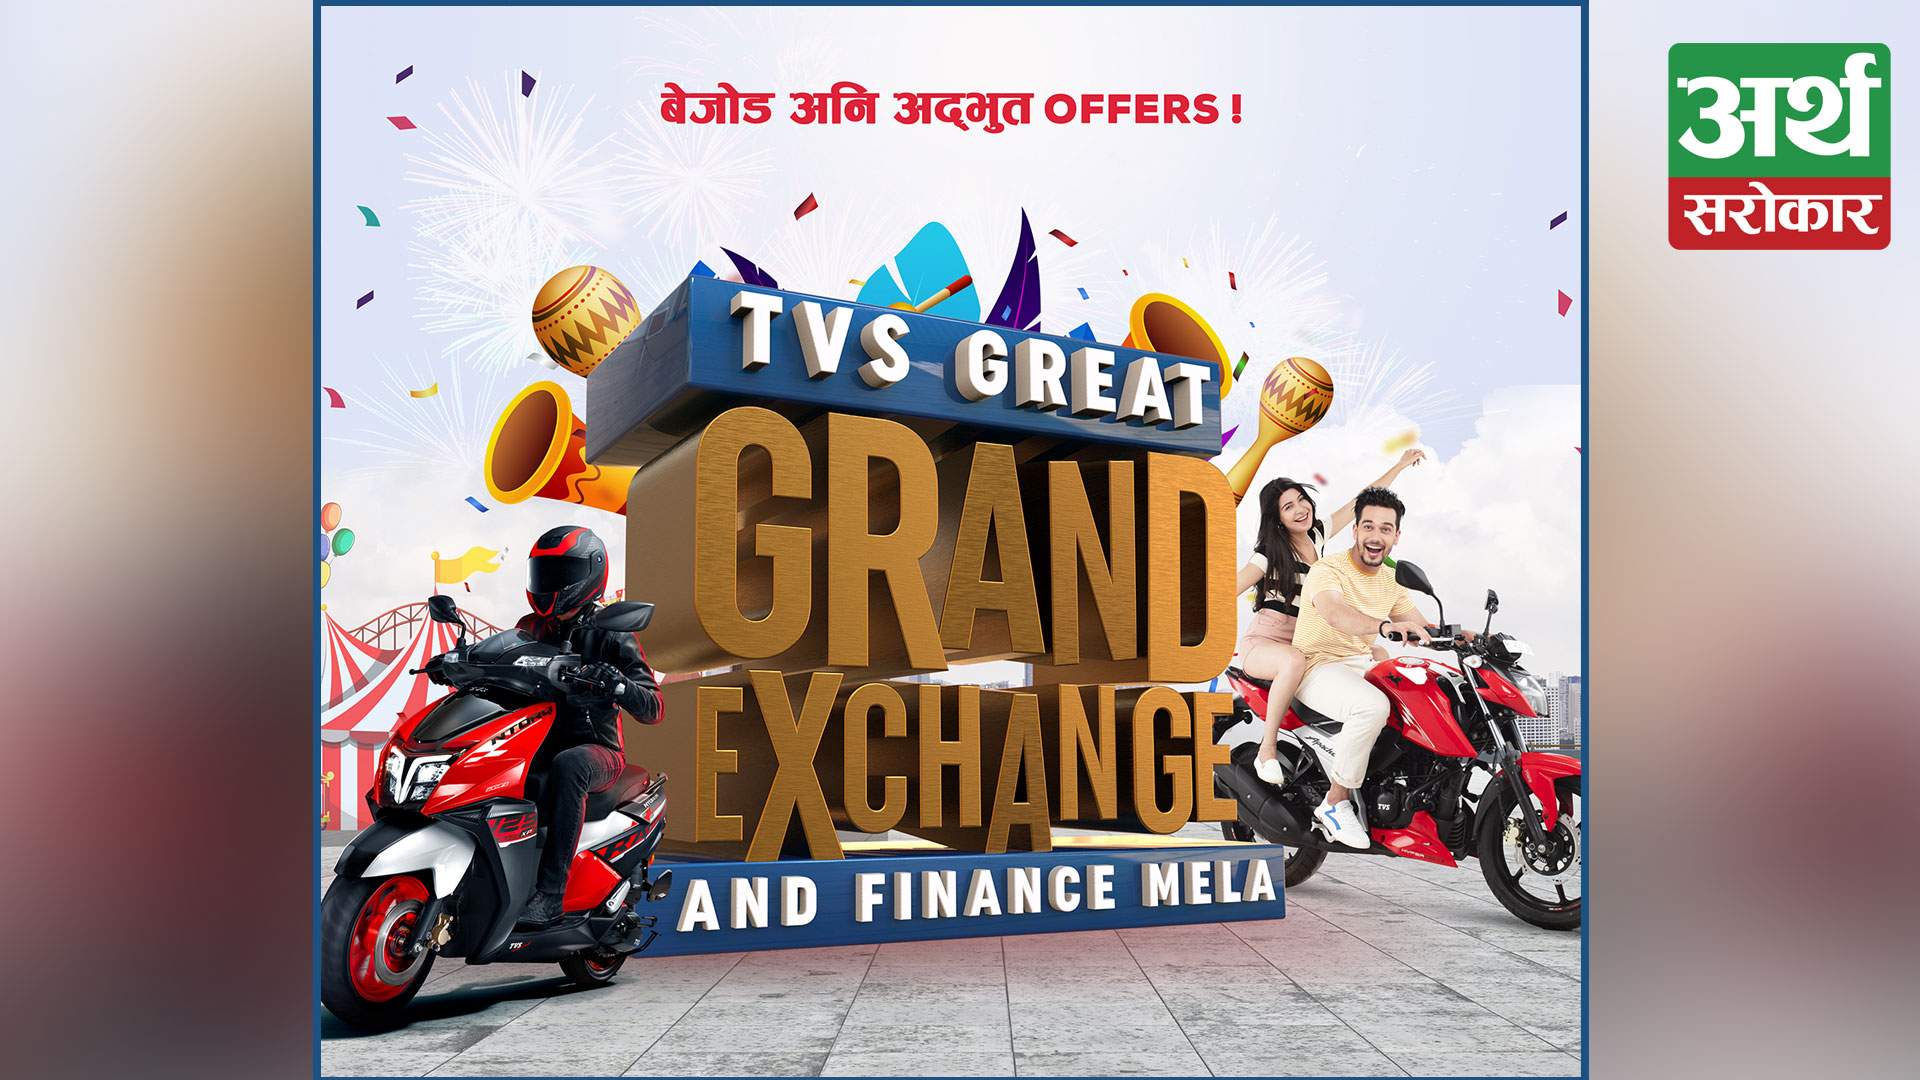 ‘Great Grand Exchange and Finance Mela’ kicks off